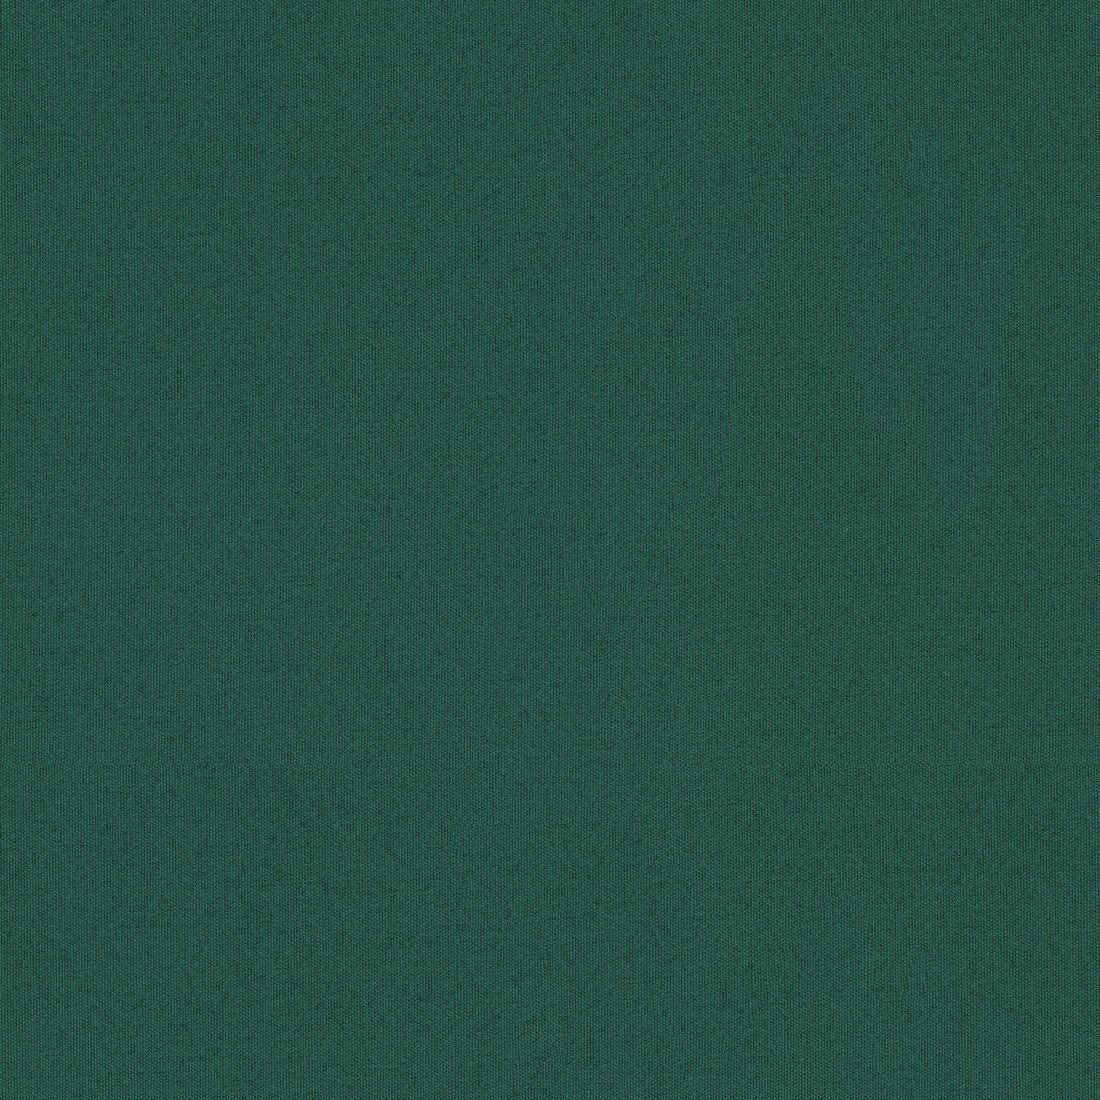 Adrien Cotton fabric in billiard color - pattern 8017121.53.0 - by Brunschwig &amp; Fils